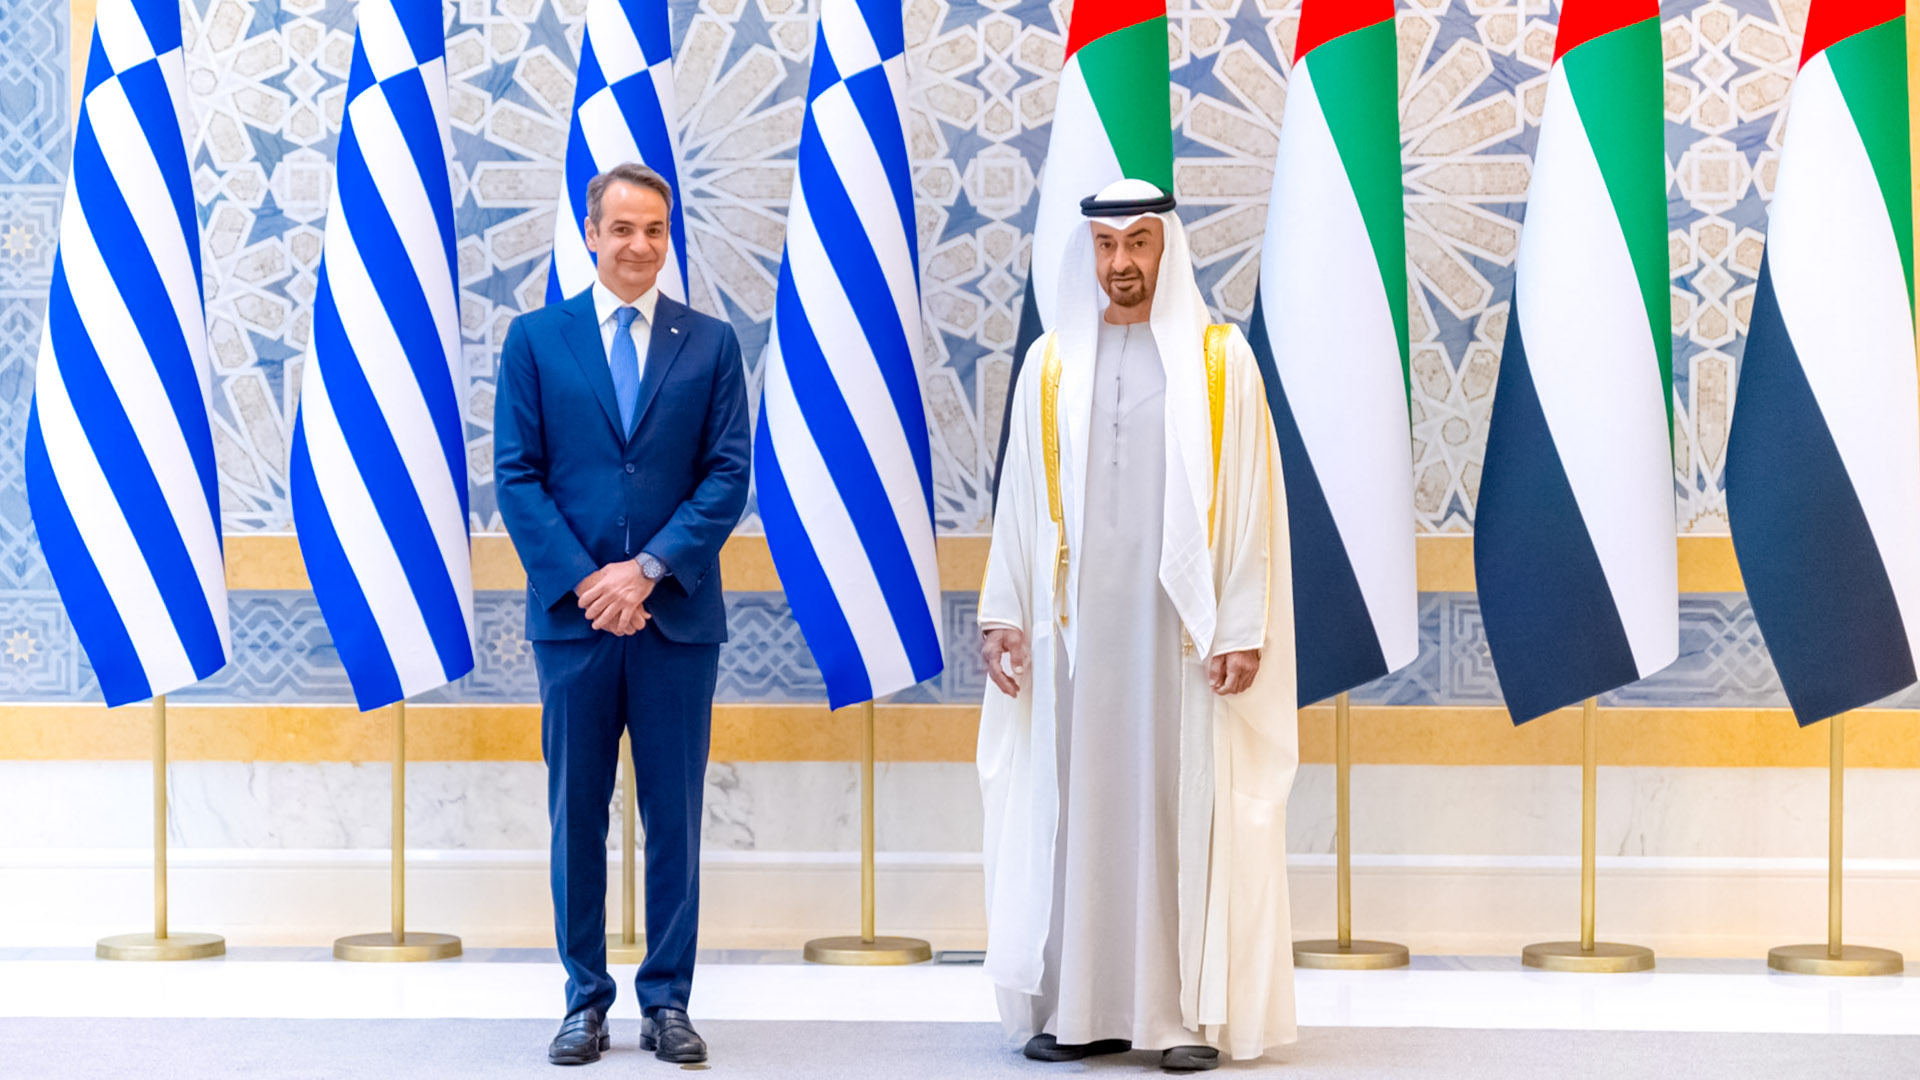 Mohammad bin Zayed and Greek Prime Minister discuss strategic partnership